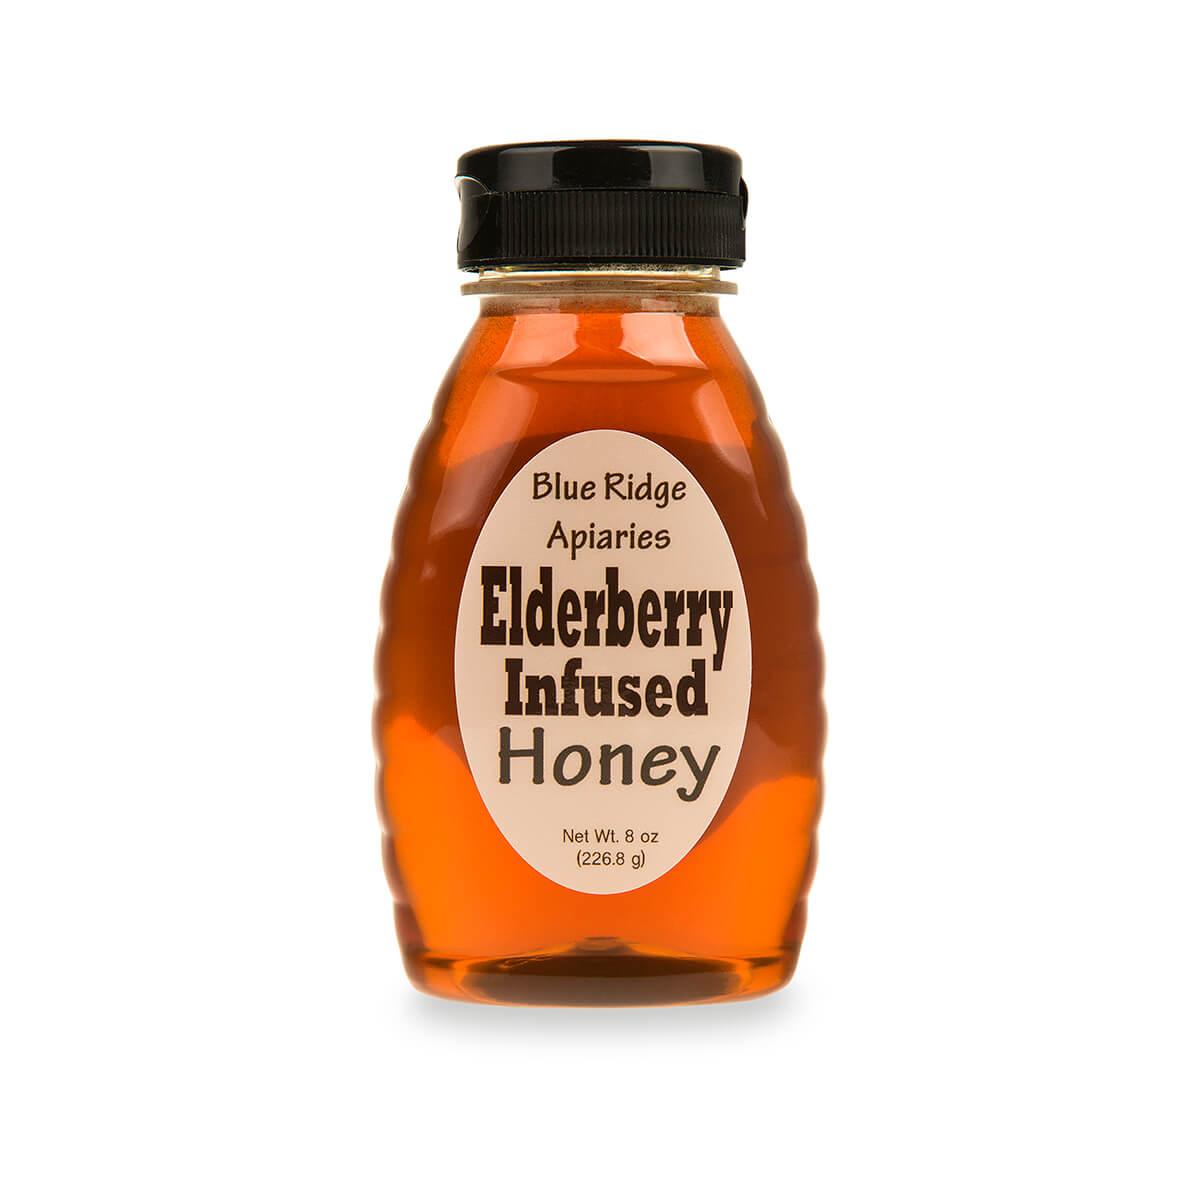  Elderberry Infused Honey